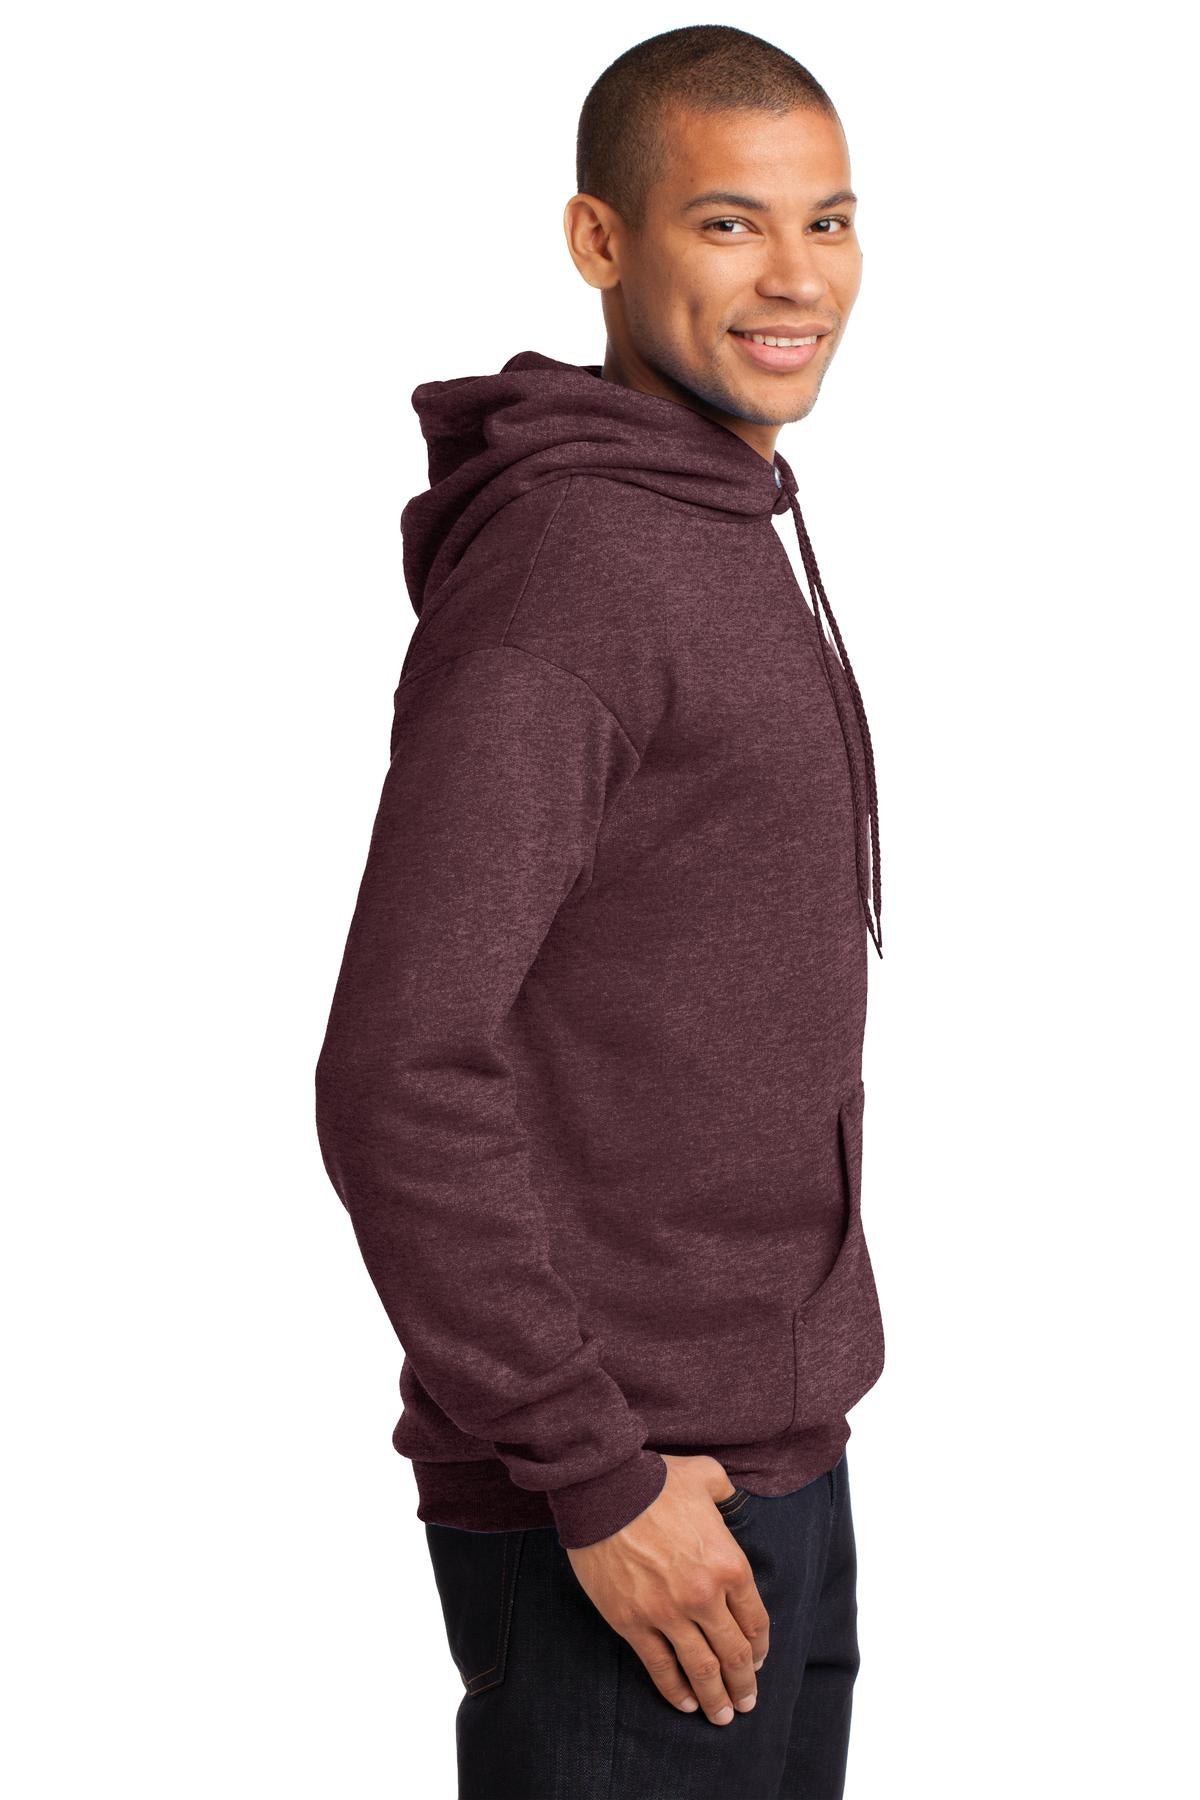 Port & Company - Core Fleece Pullover Hooded Sweatshirt. PC78H - Heather Athletic Maroon